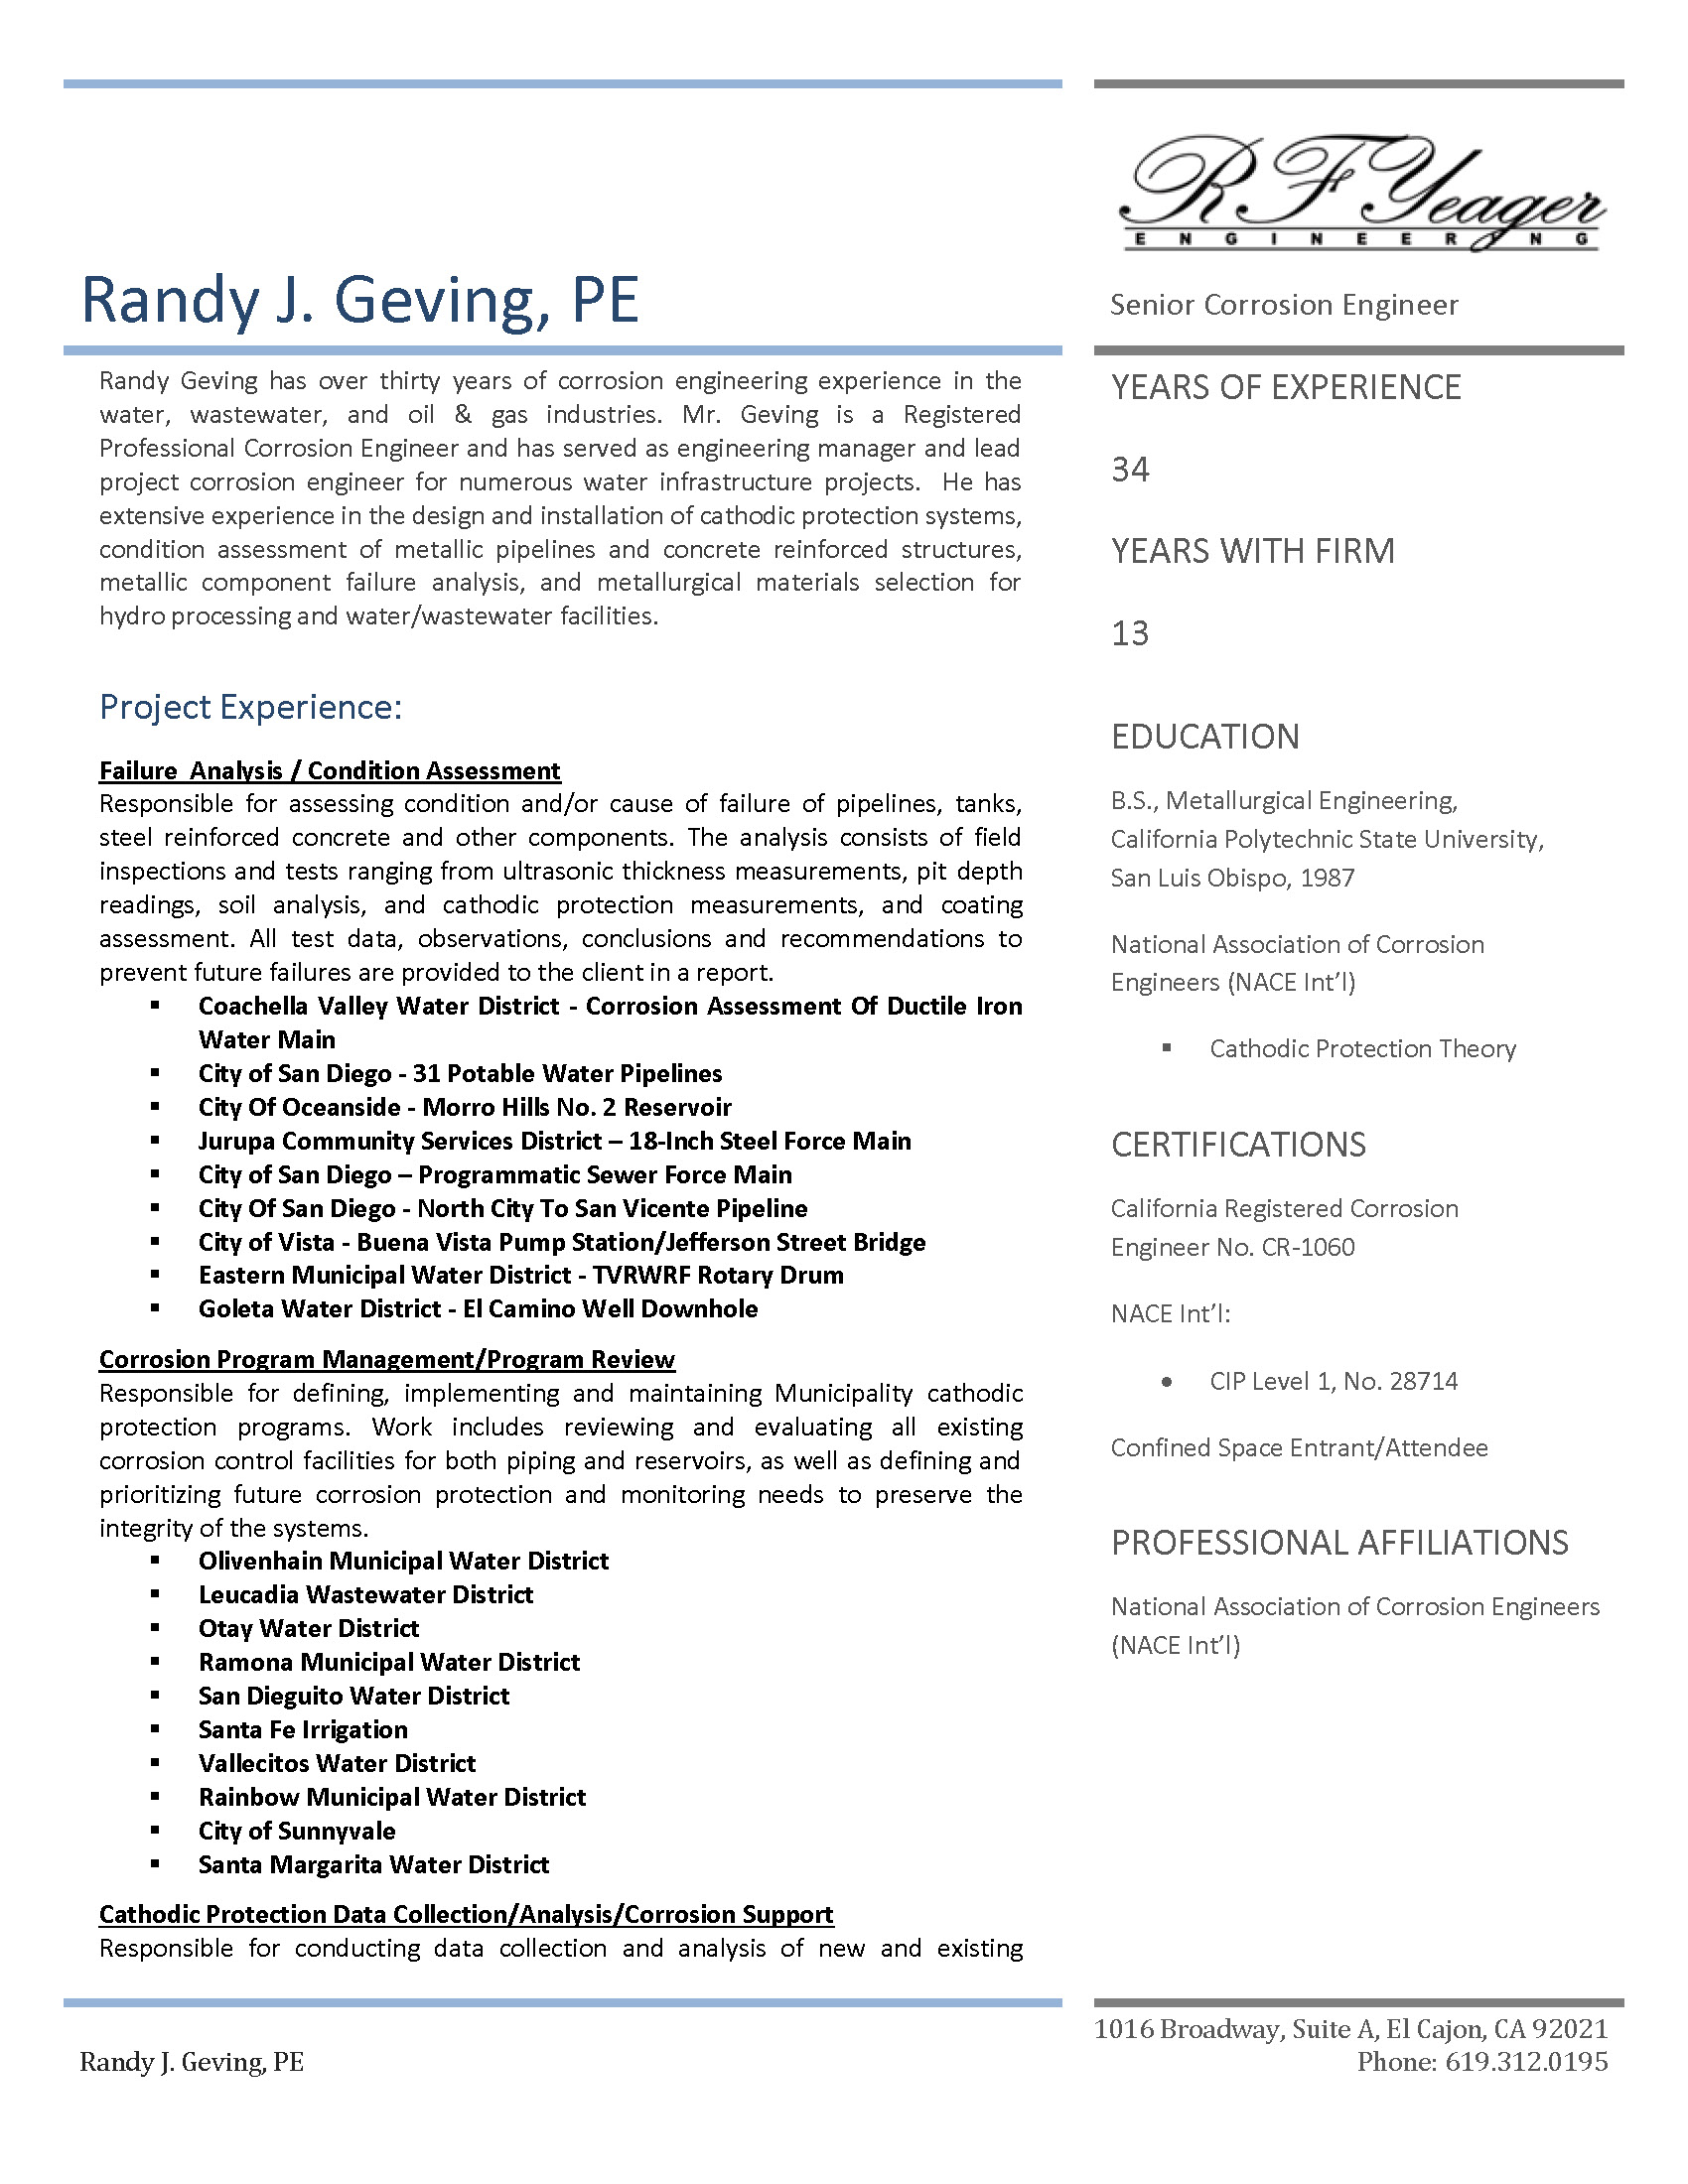 RJ Geving Resume